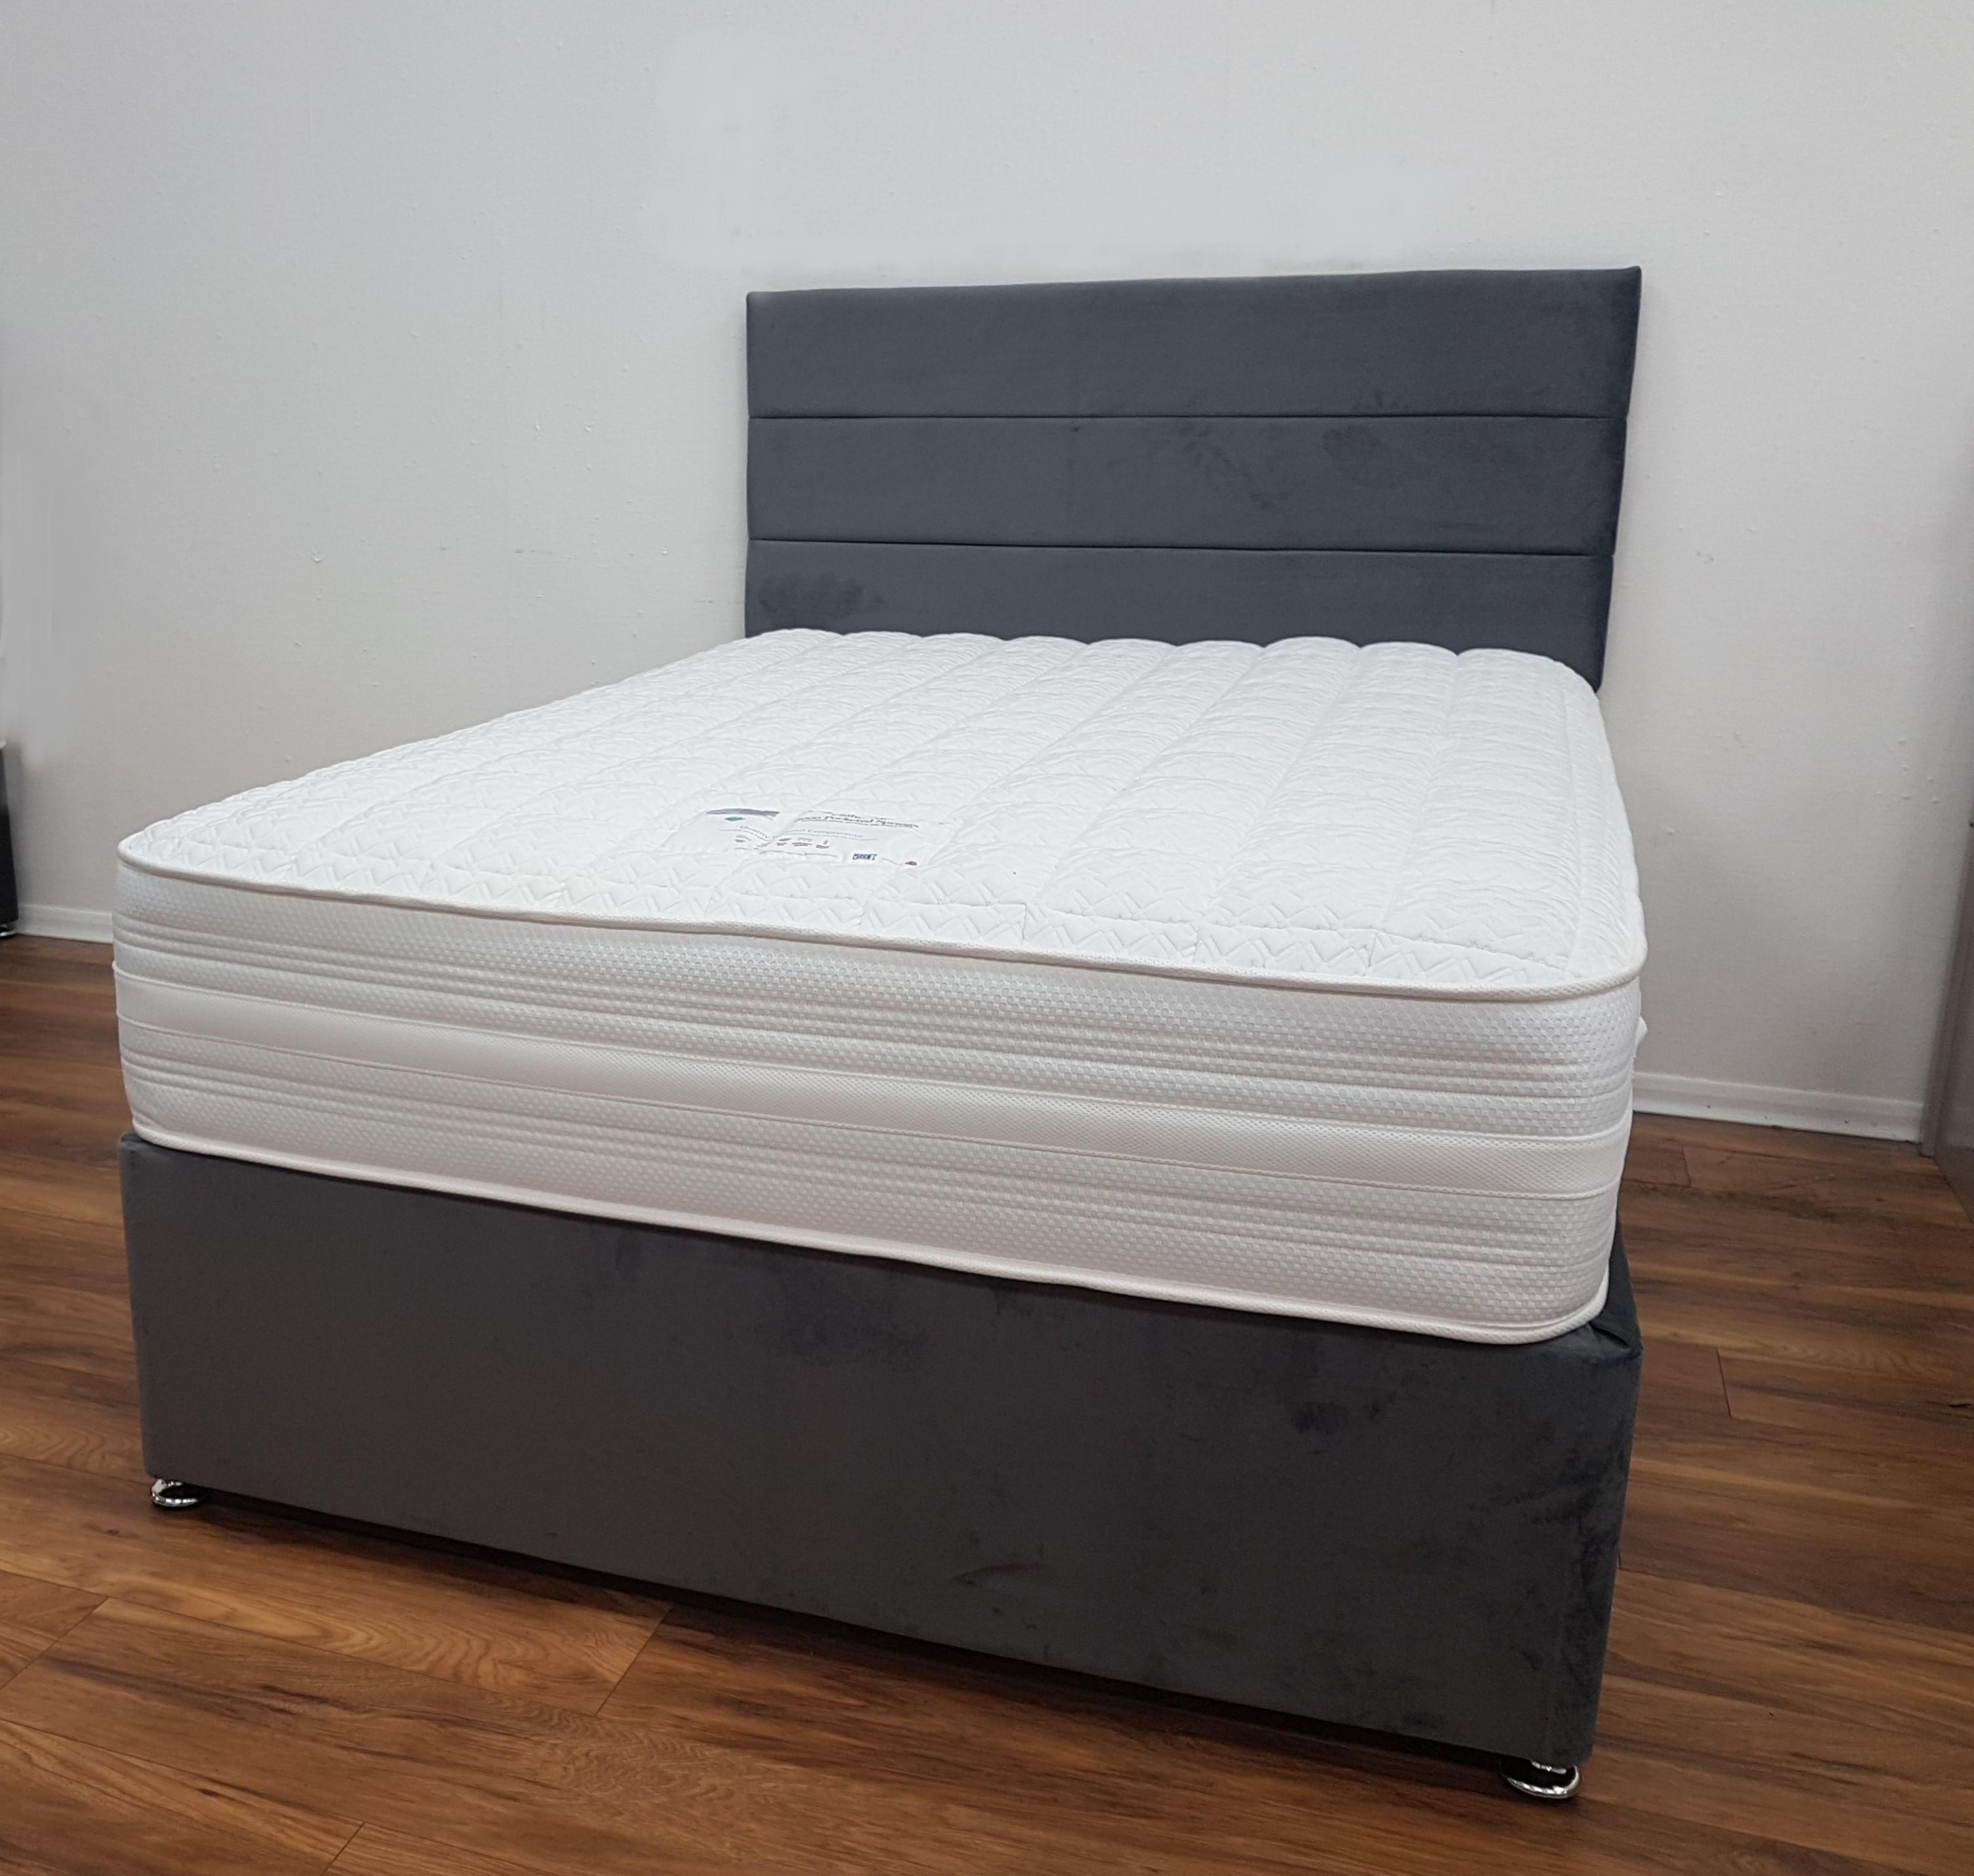 Chilworth 3000 pocket sprung, medium hybrid, cool gel mattress,